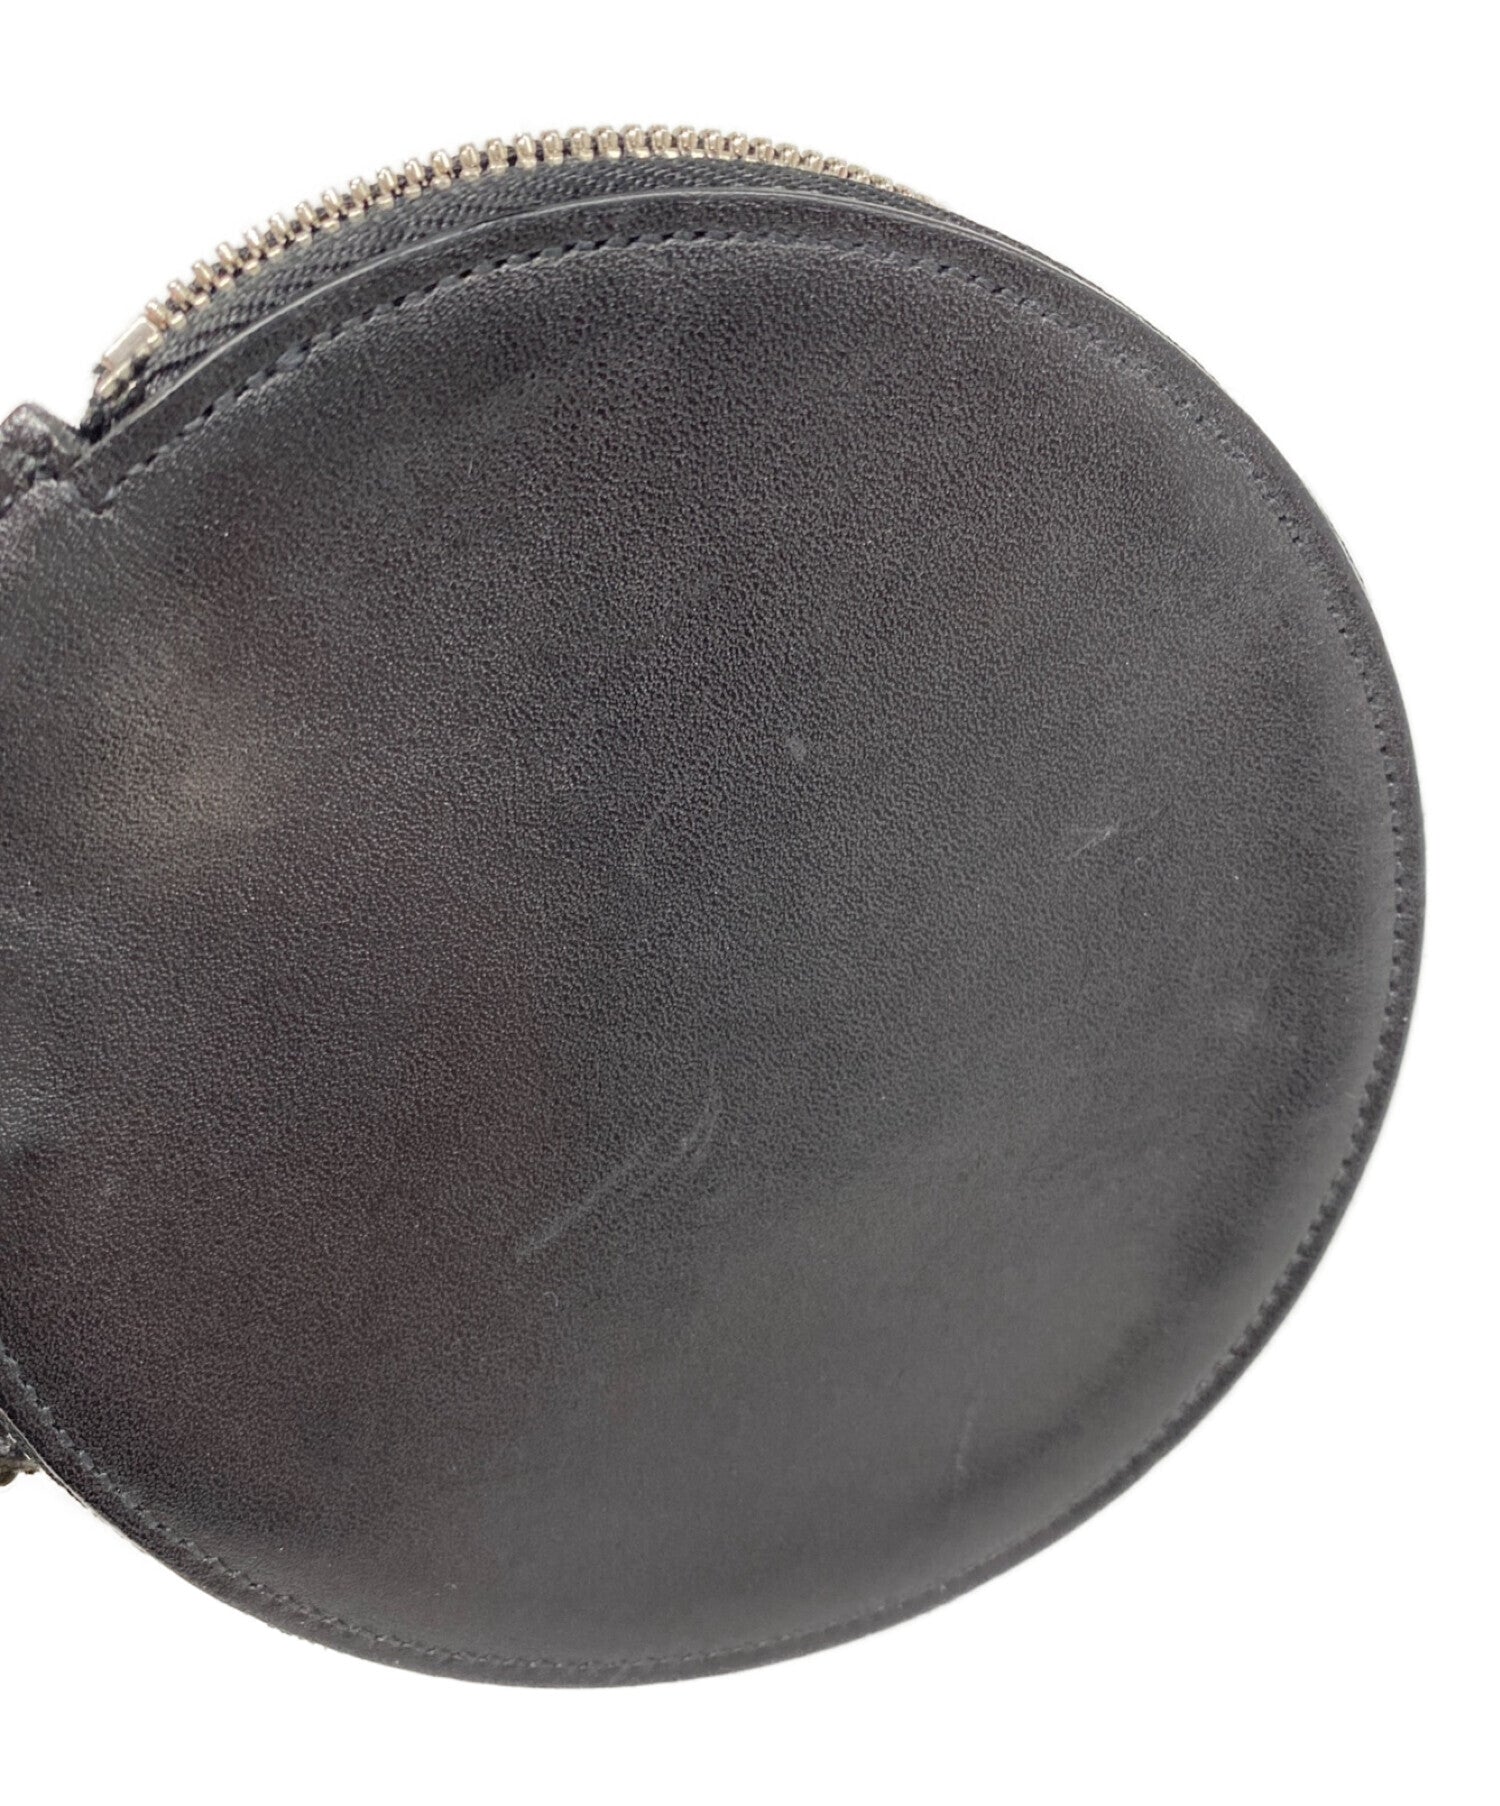 Round coin purse $260.00  Louis vuitton, Purses for sale, Coin purse